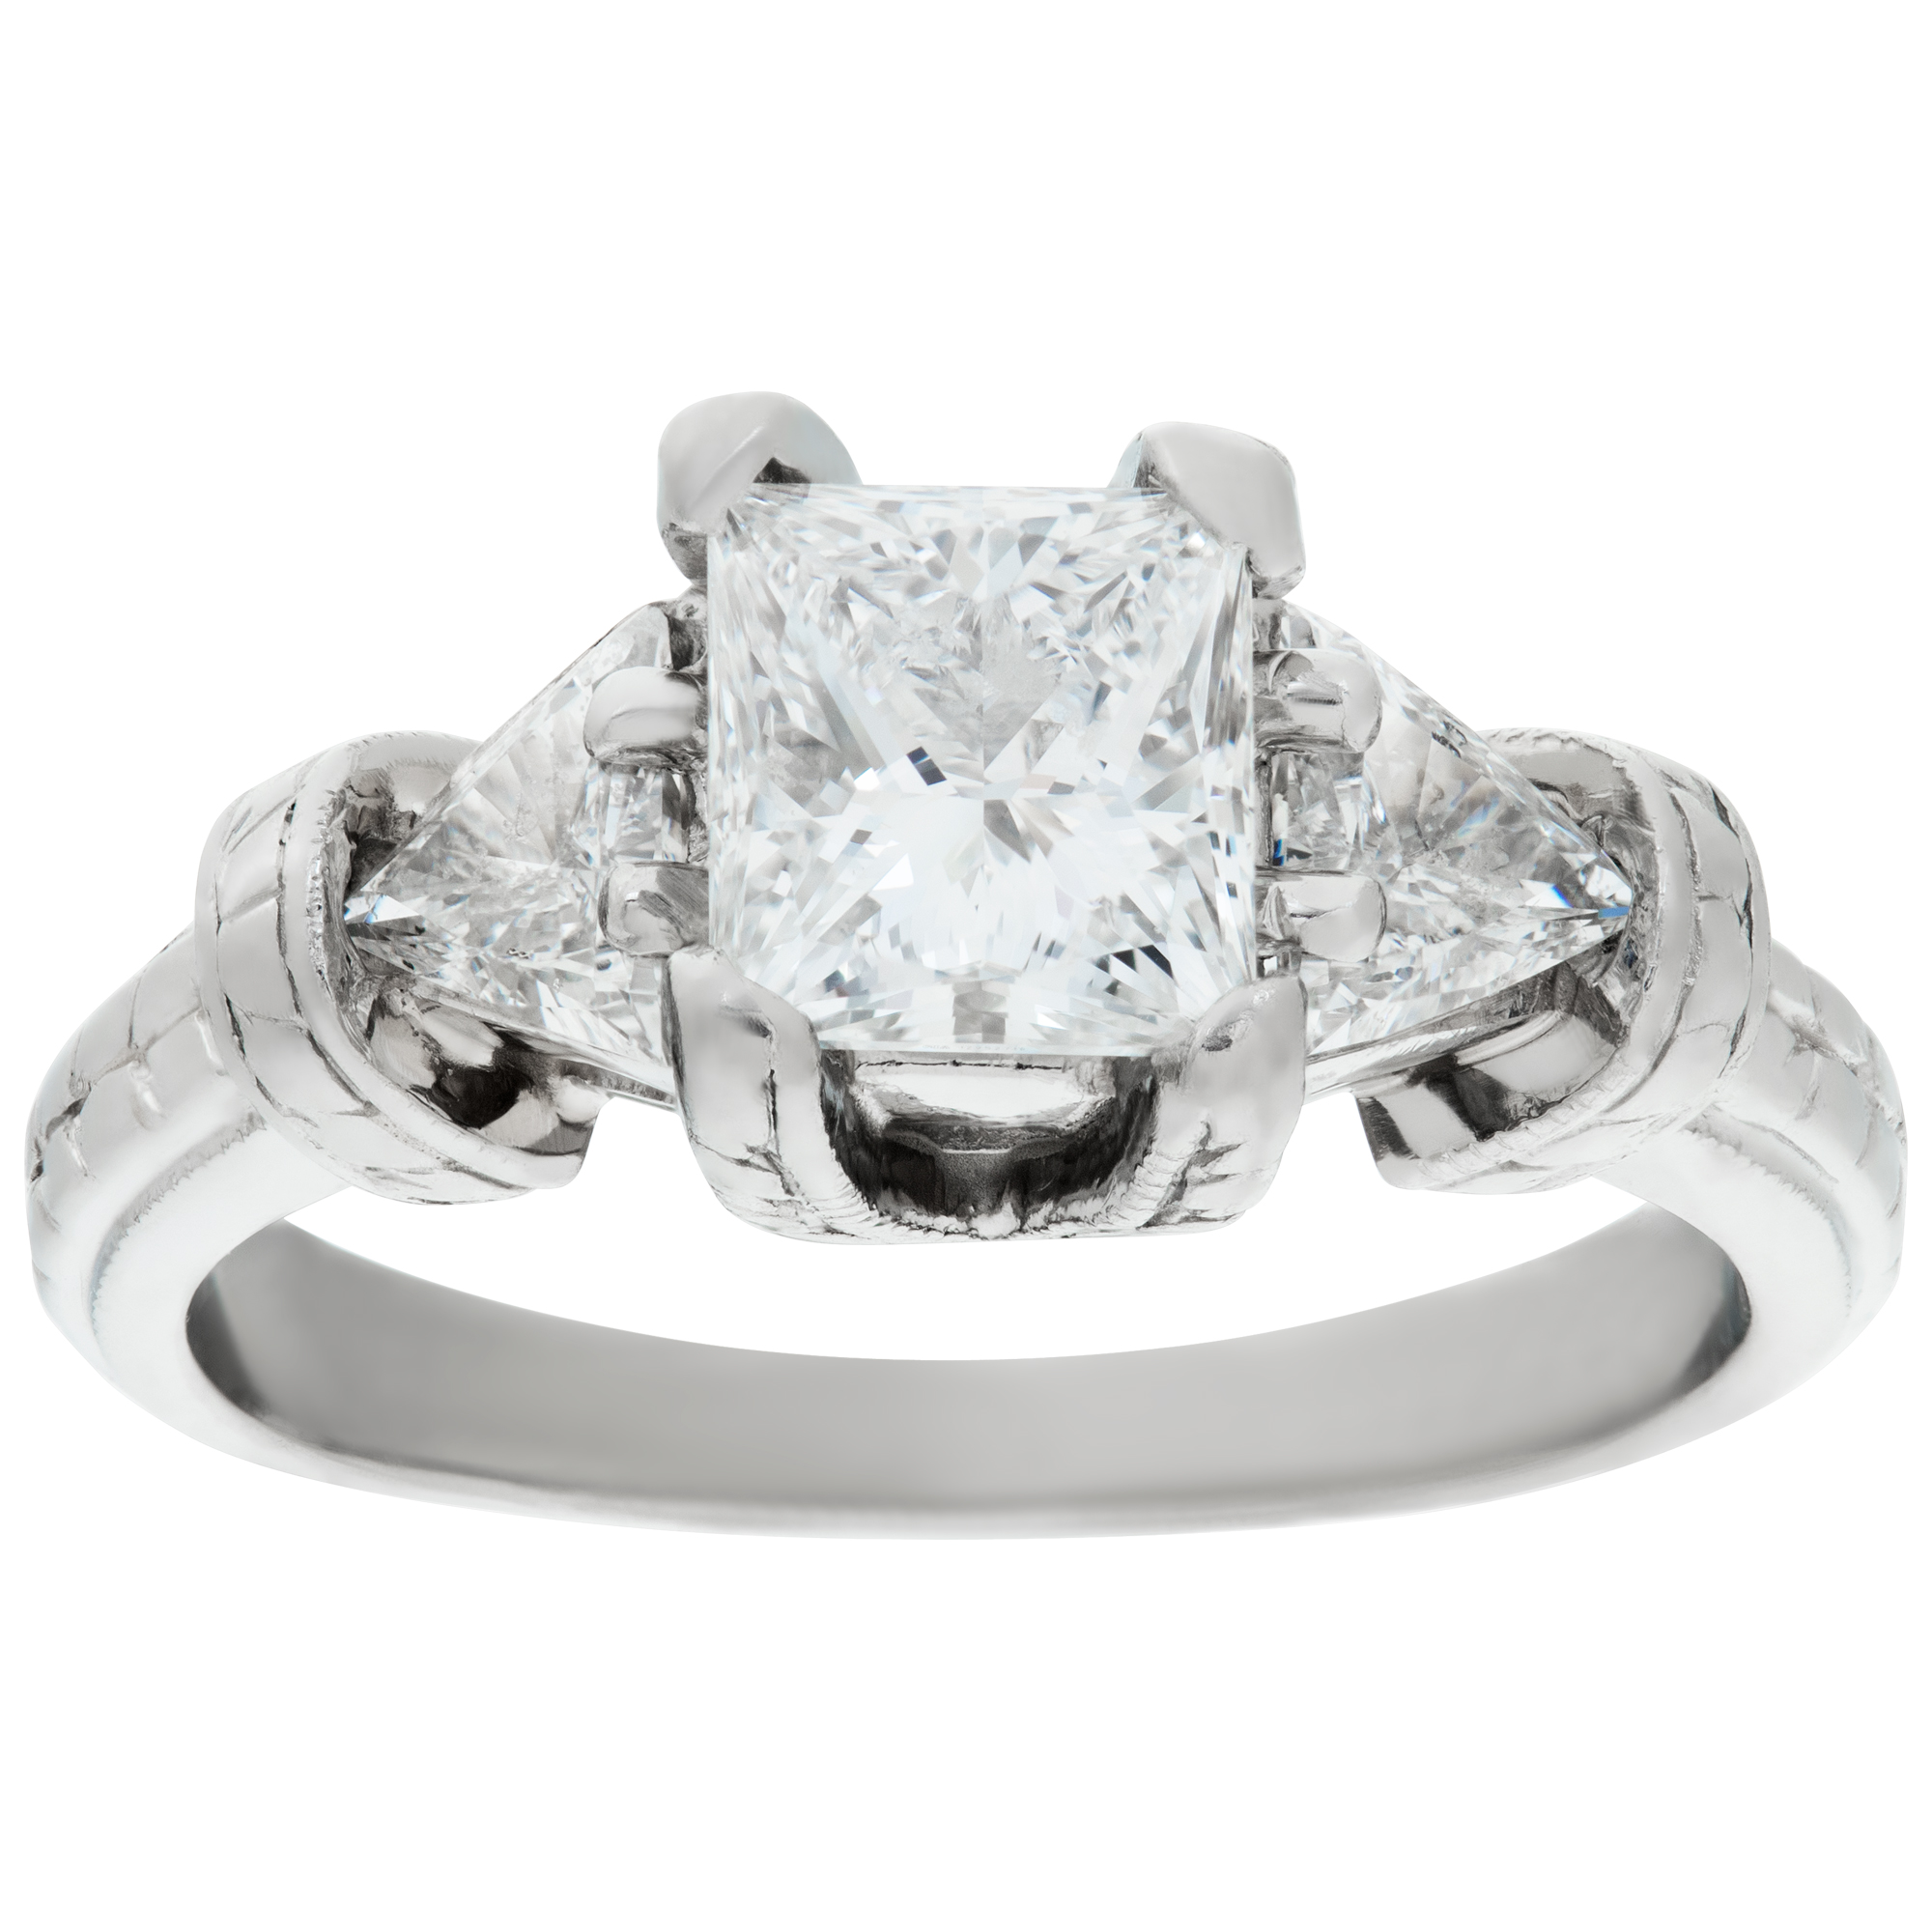 GIA certified emerald cut diamond 1.04 carat (D color, VS1 clarity) ring image 1